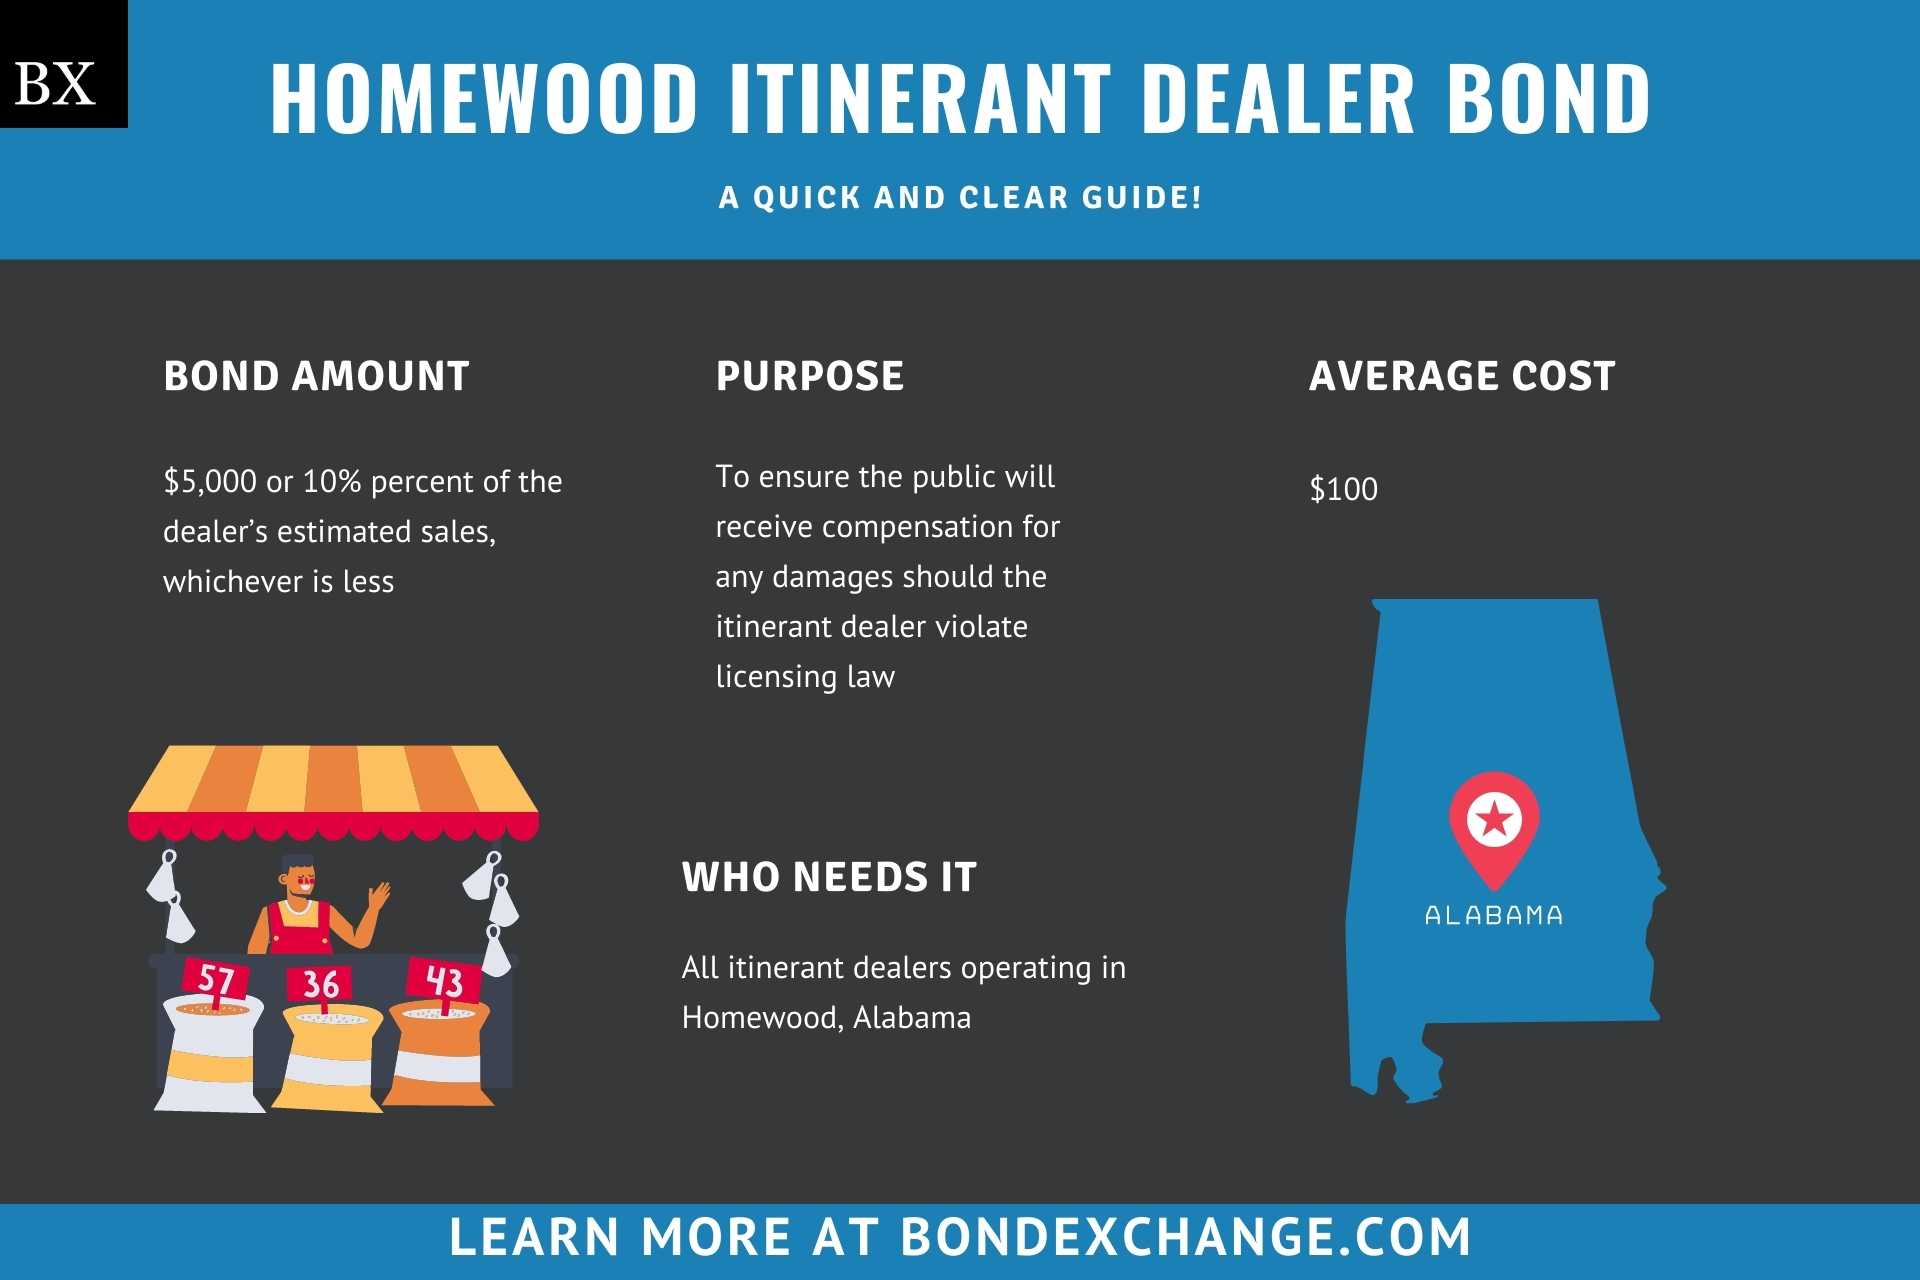 Homewood Itinerant Dealer Bond